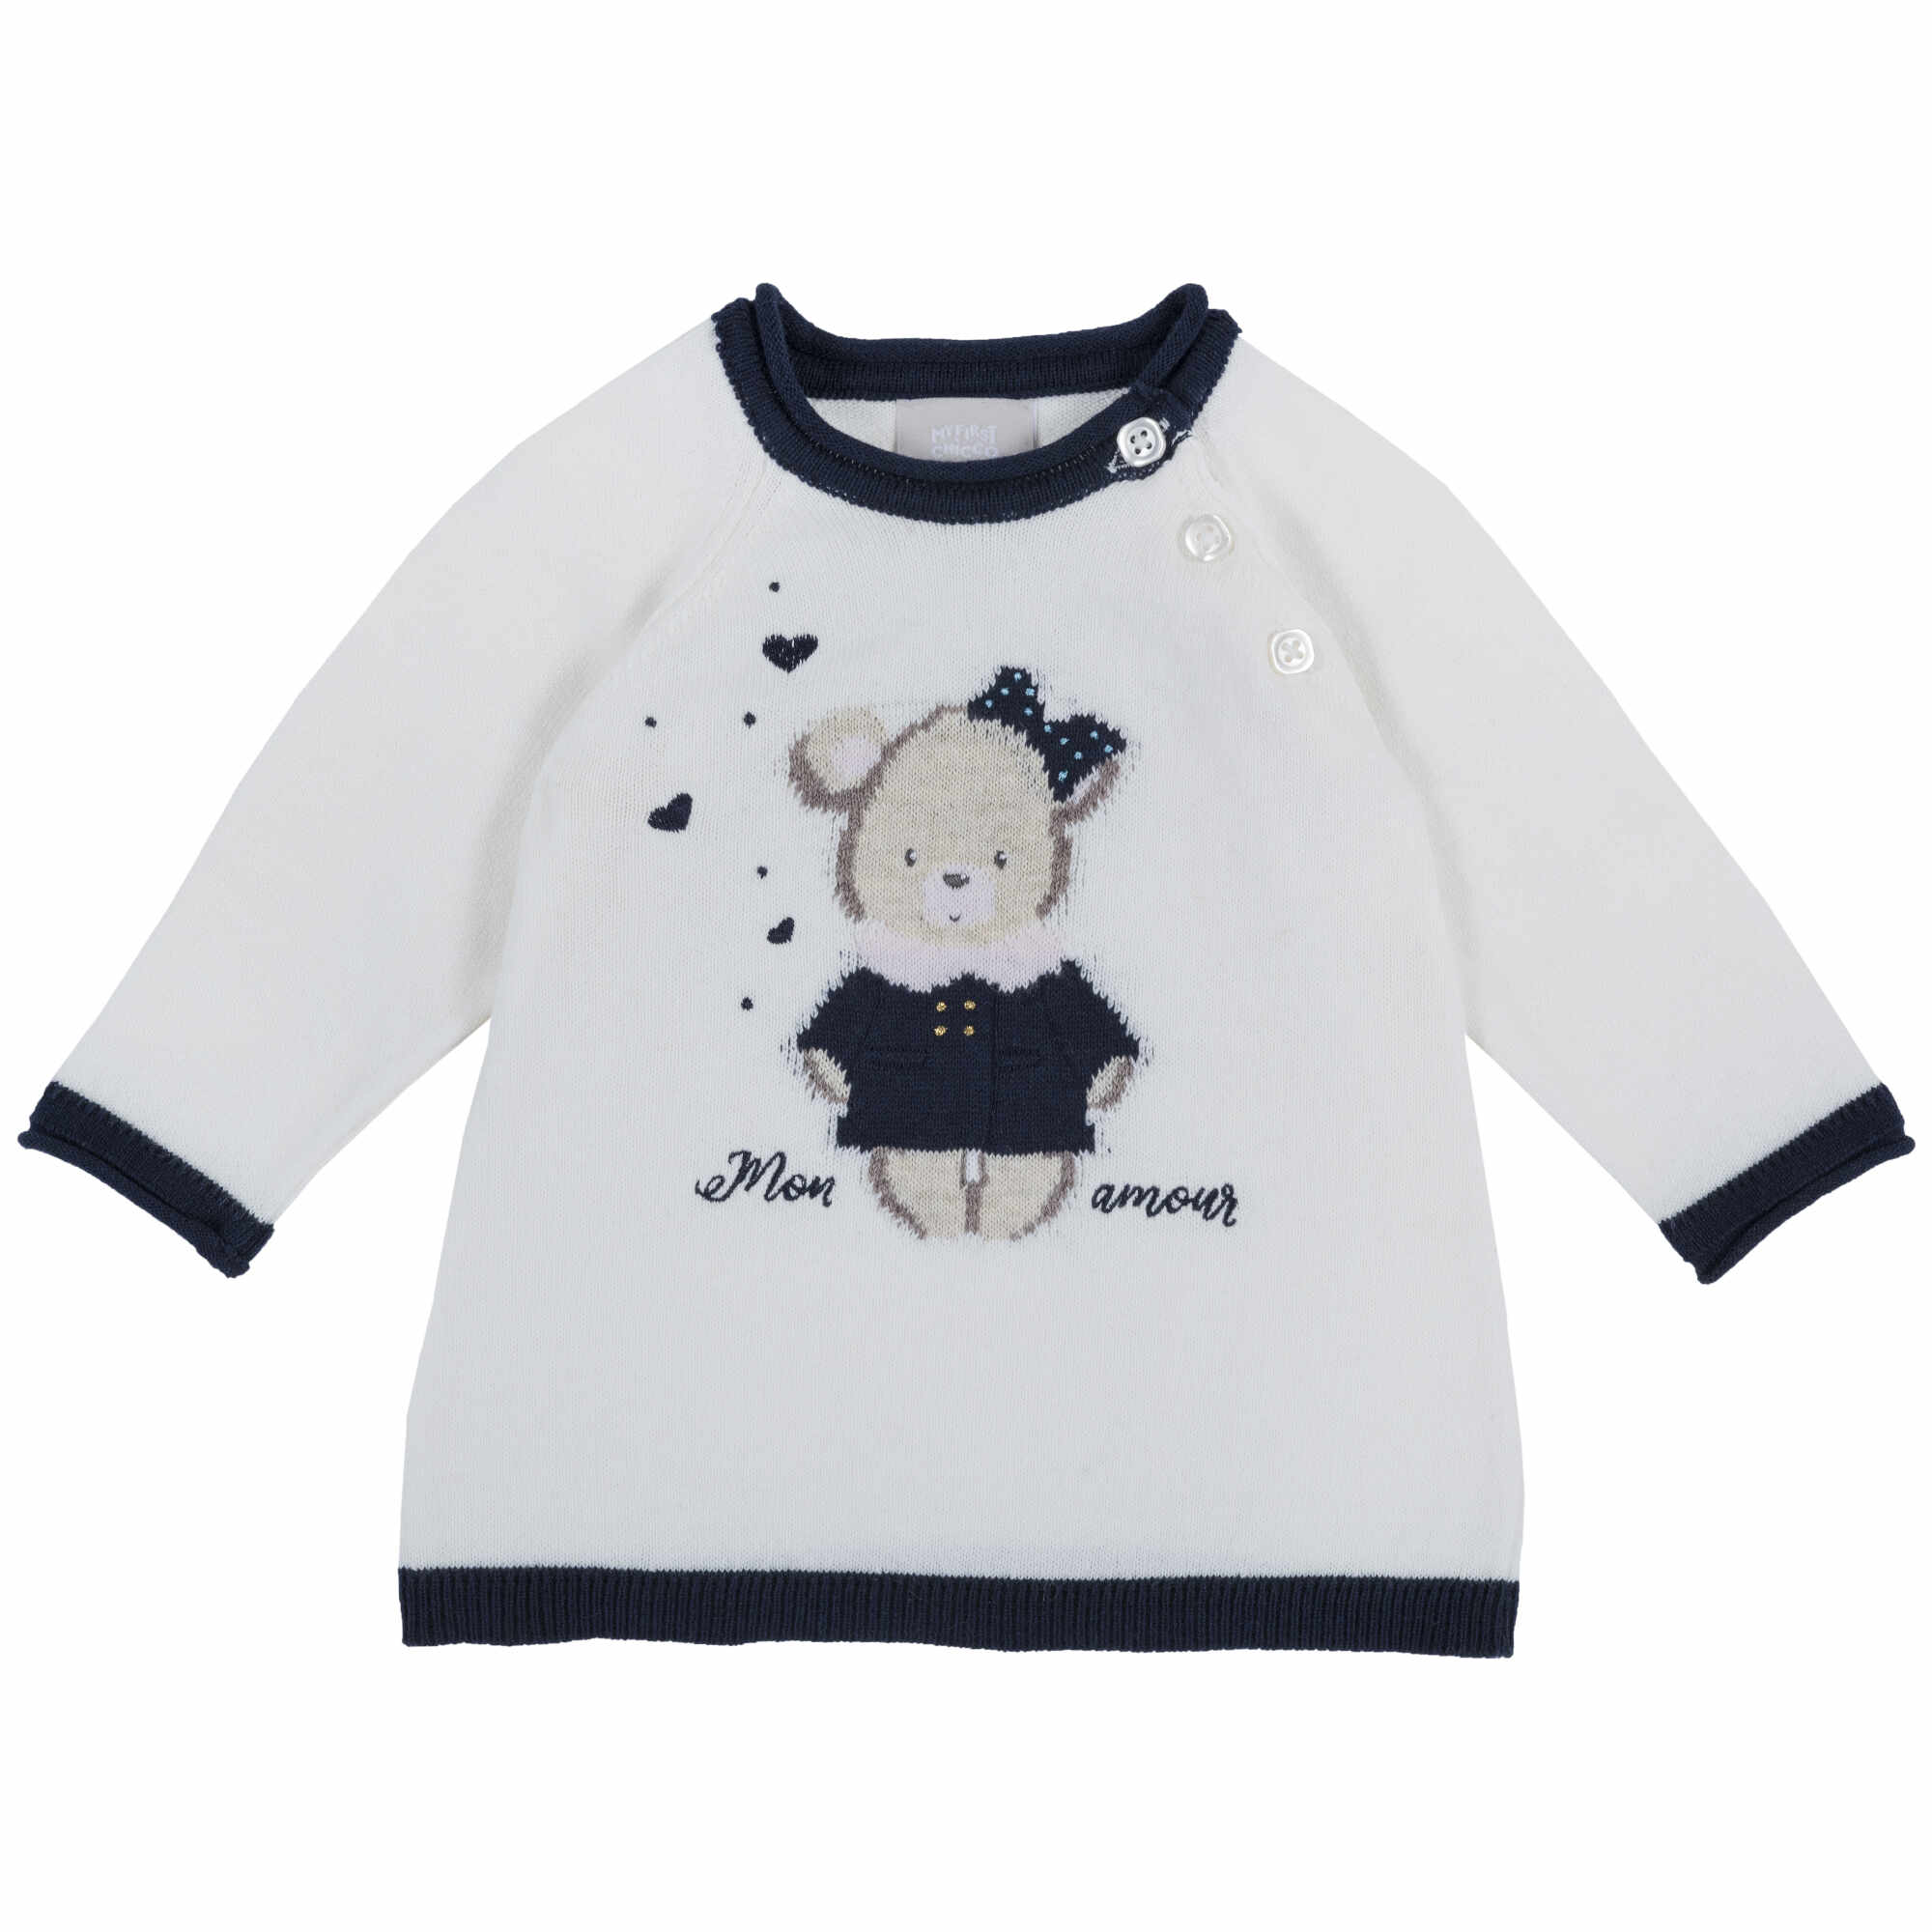 Rochie copii Chicco, tricotata, imprimeu ursulet, 03529